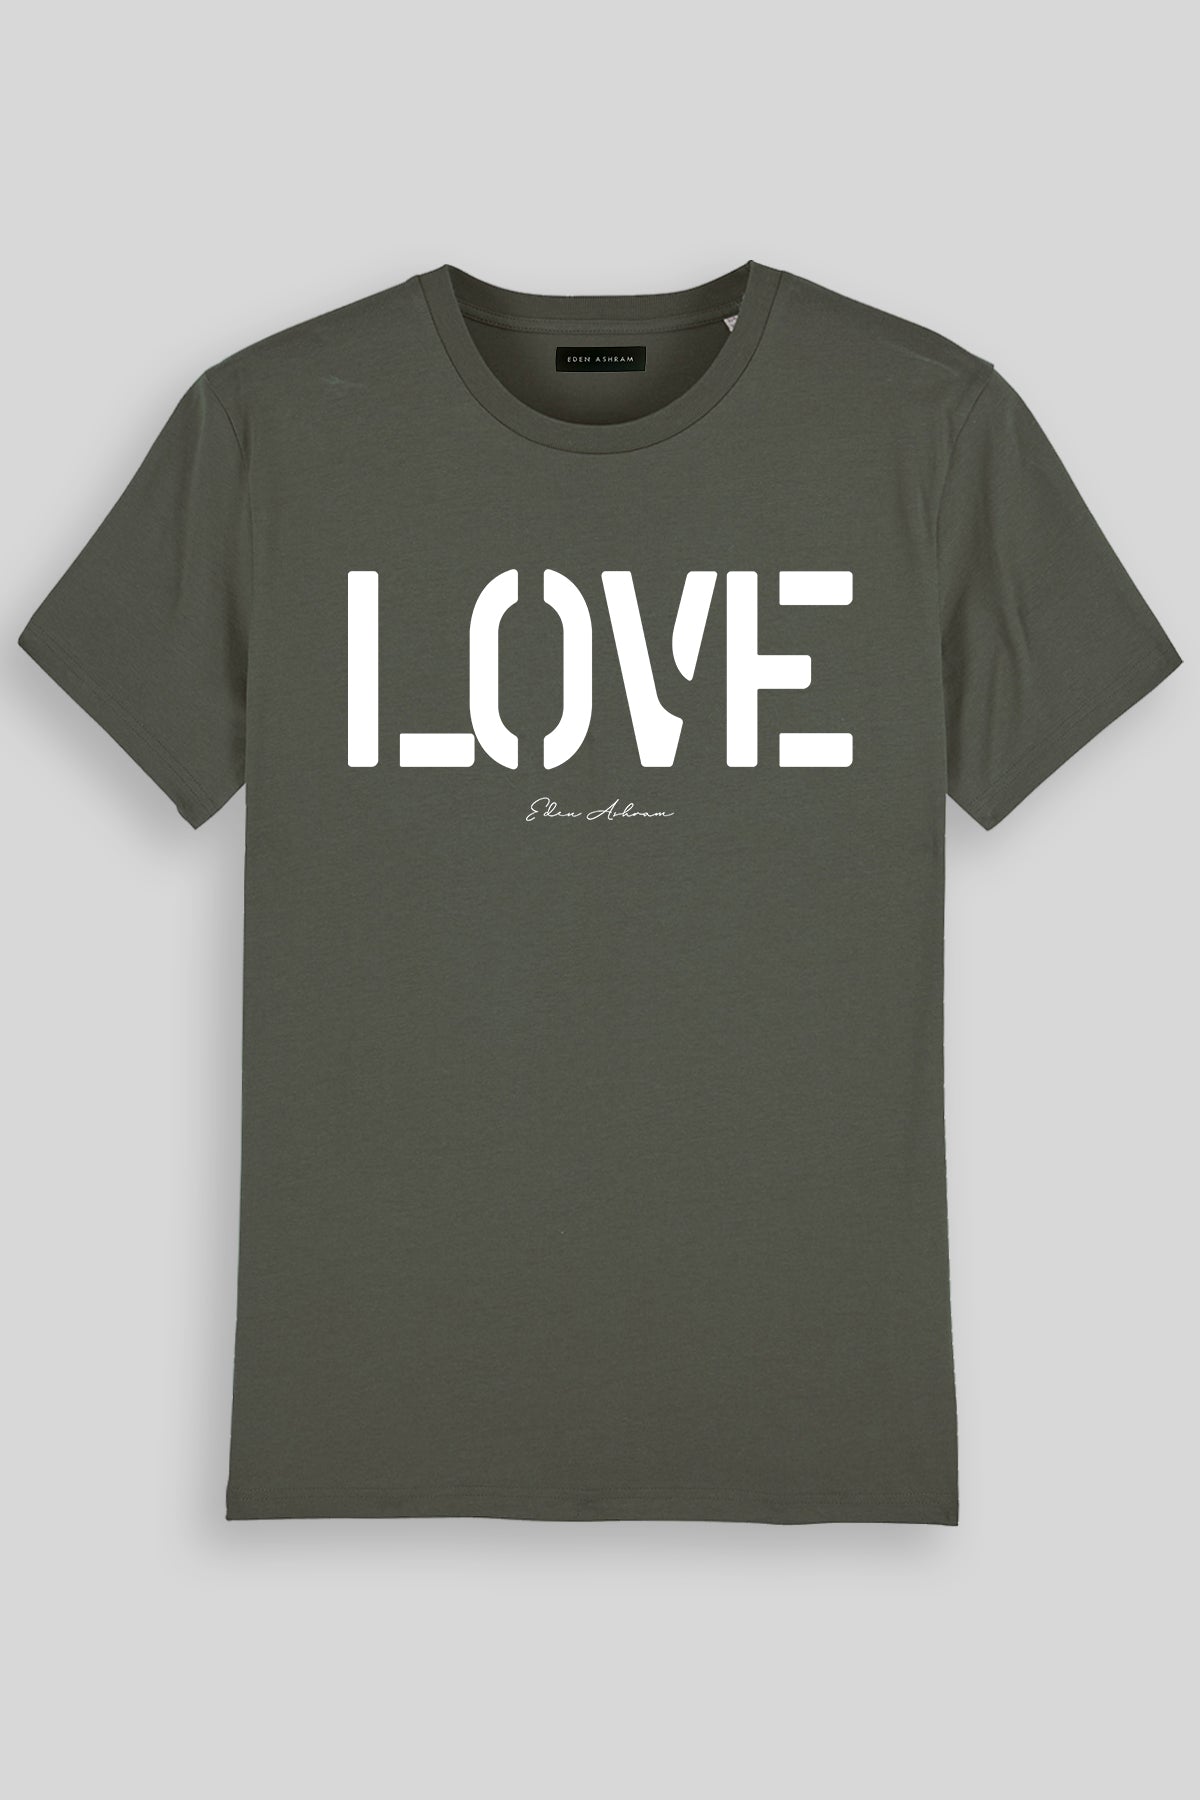 EDEN ASHRAM LOVE Premium Classic T-Shirt Khaki